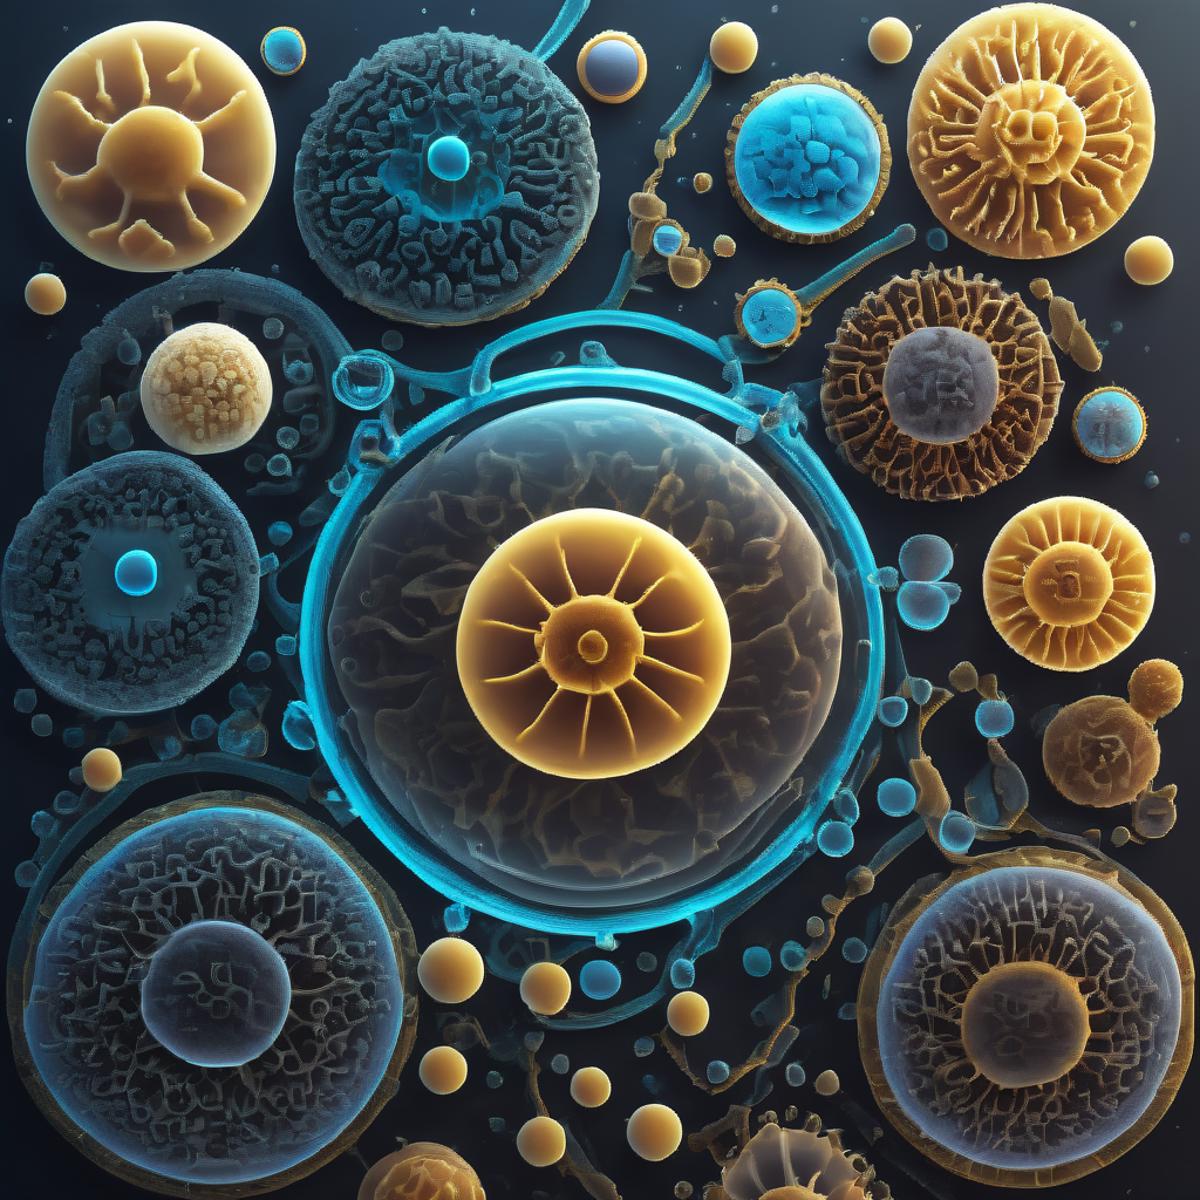 Microbiology-XL SickLIzard image by sickllizardVFX